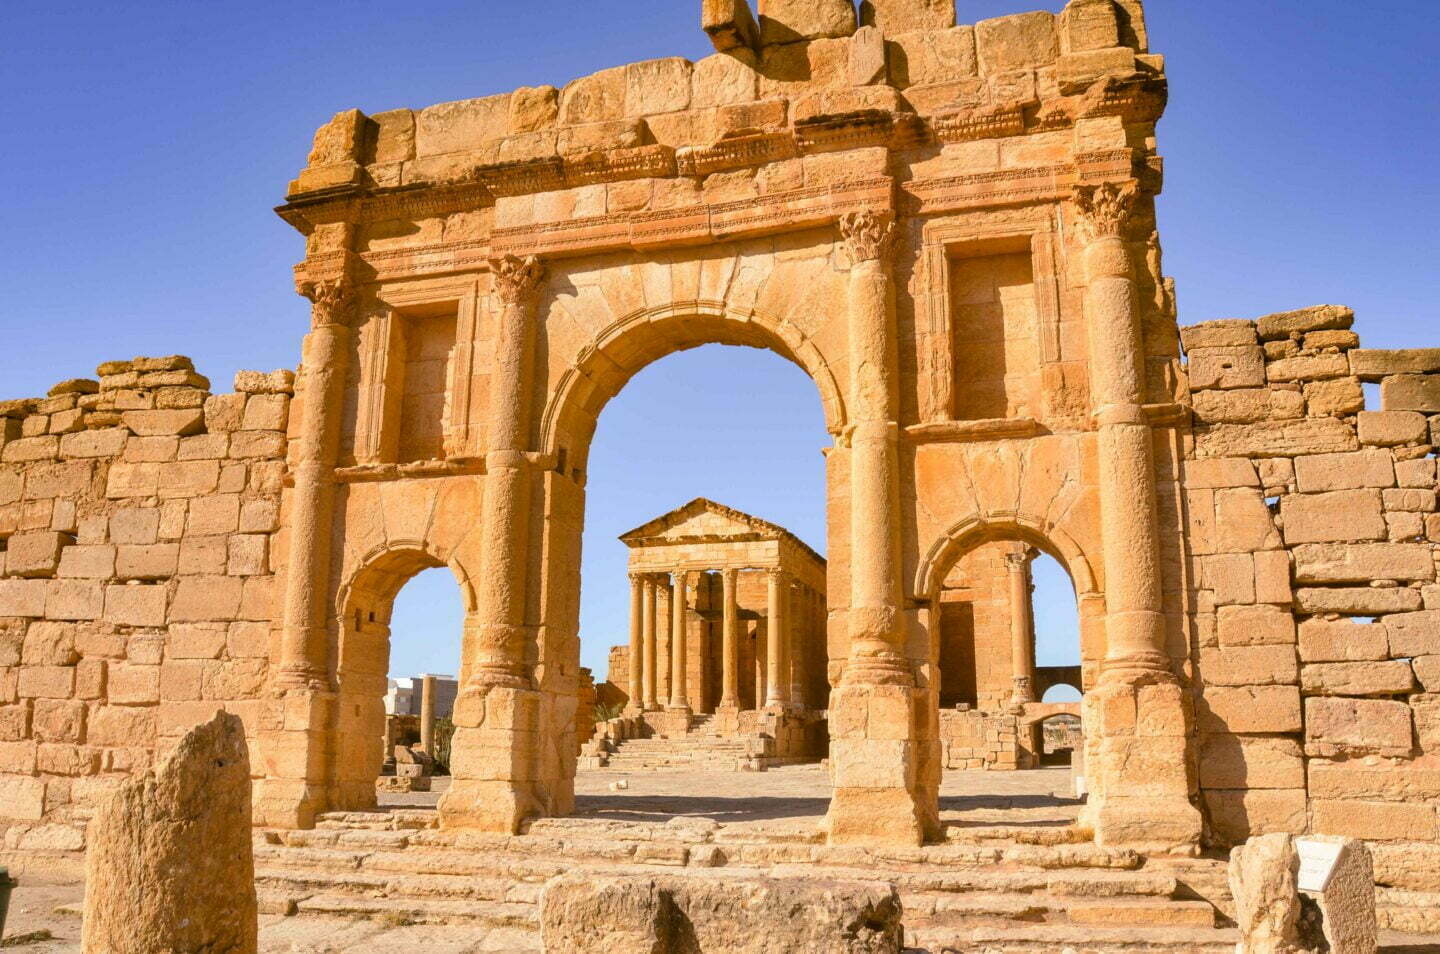 Tunisia - Sbeitla and the Roman city of Sufetula